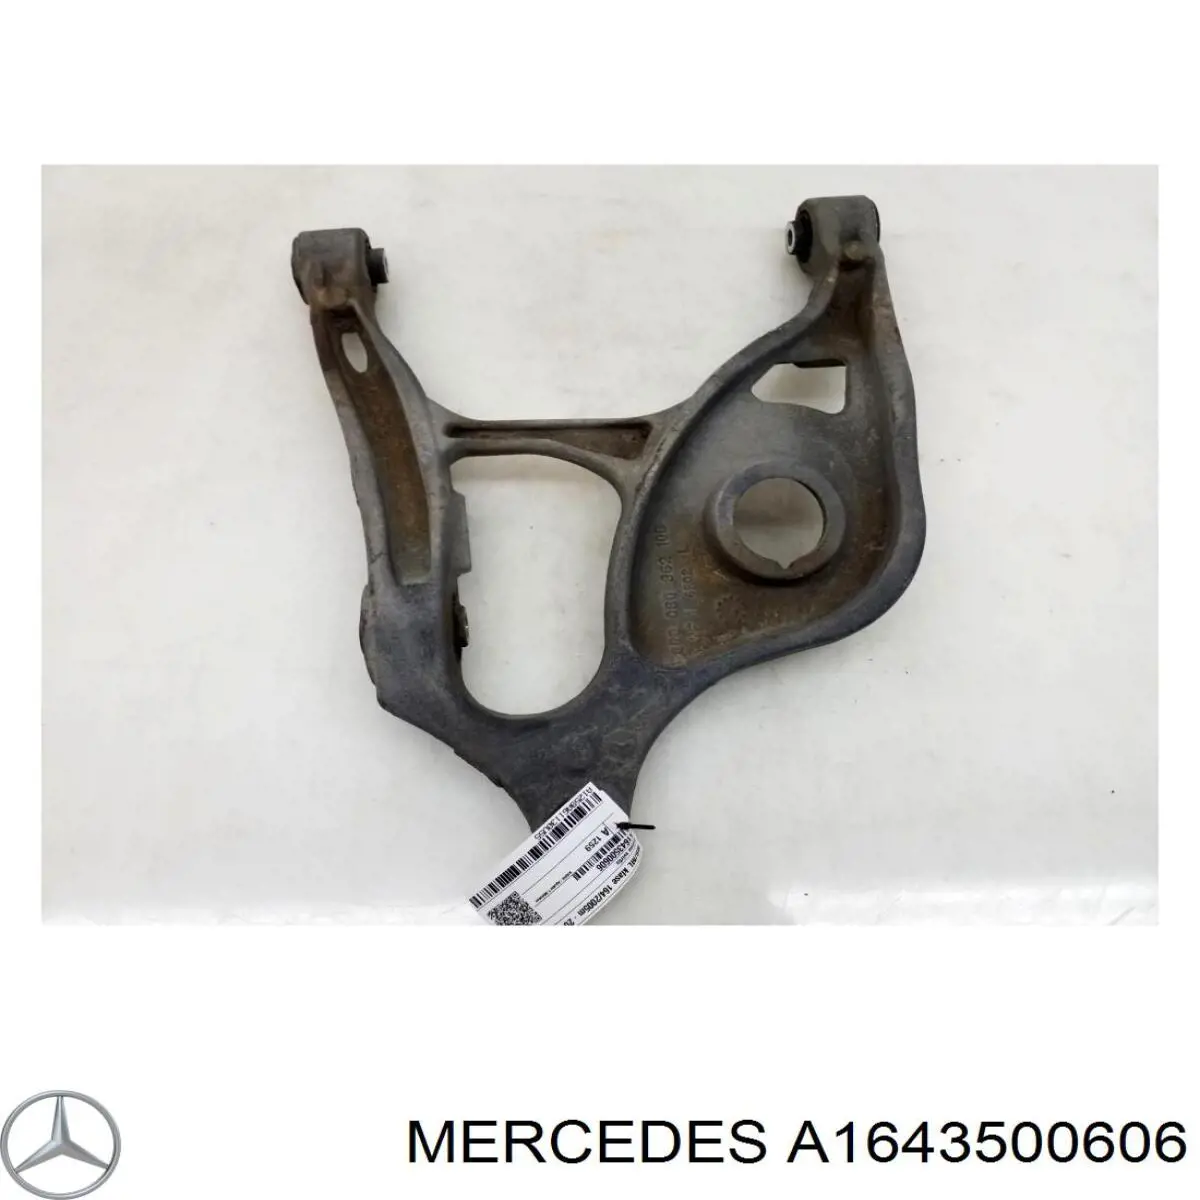 Brazo suspension (control) trasero inferior izquierdo para Mercedes ML/GLE (W164)